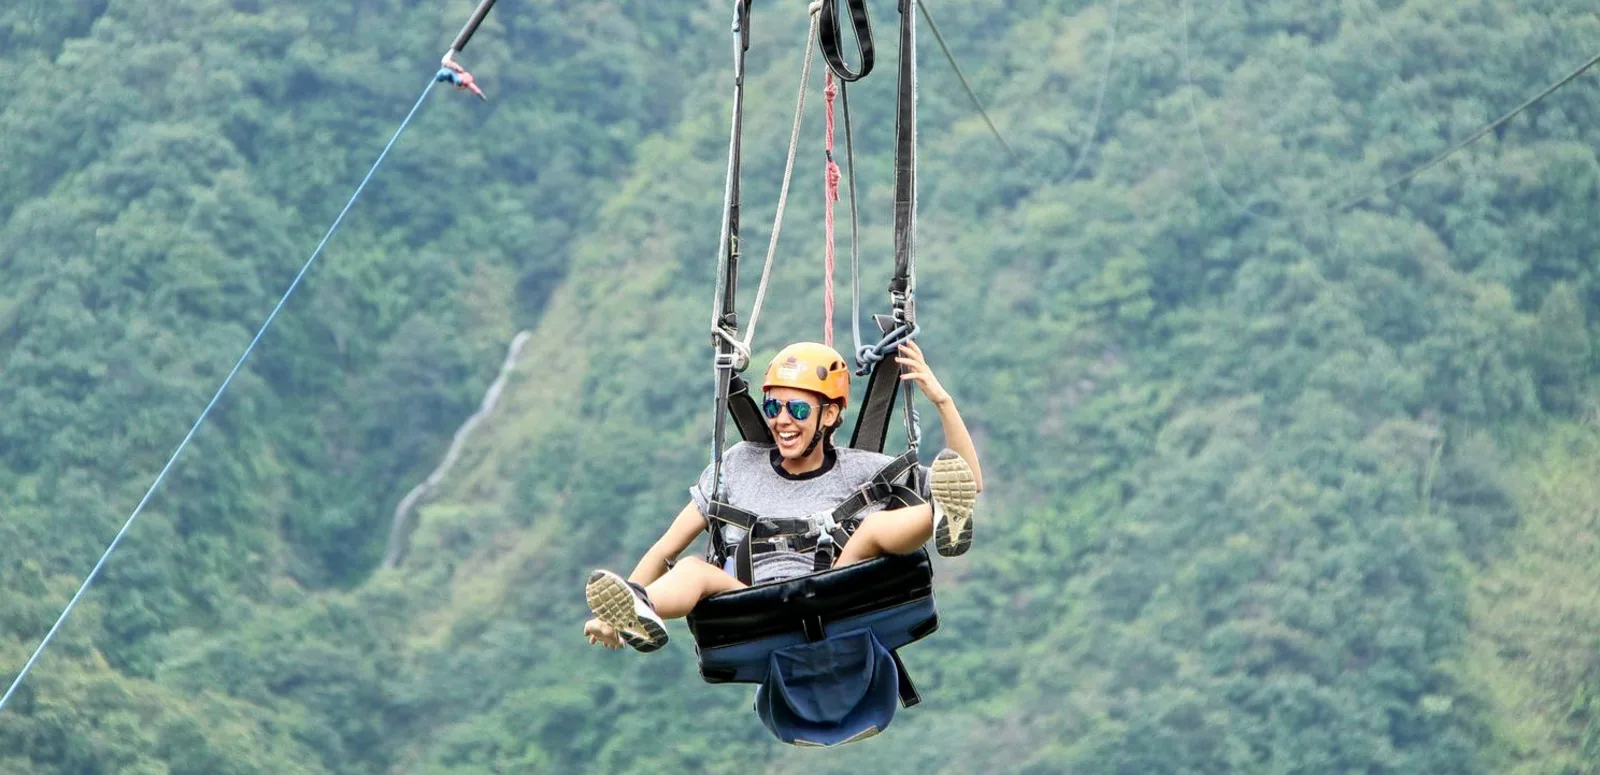 Ziplining in Nepal image